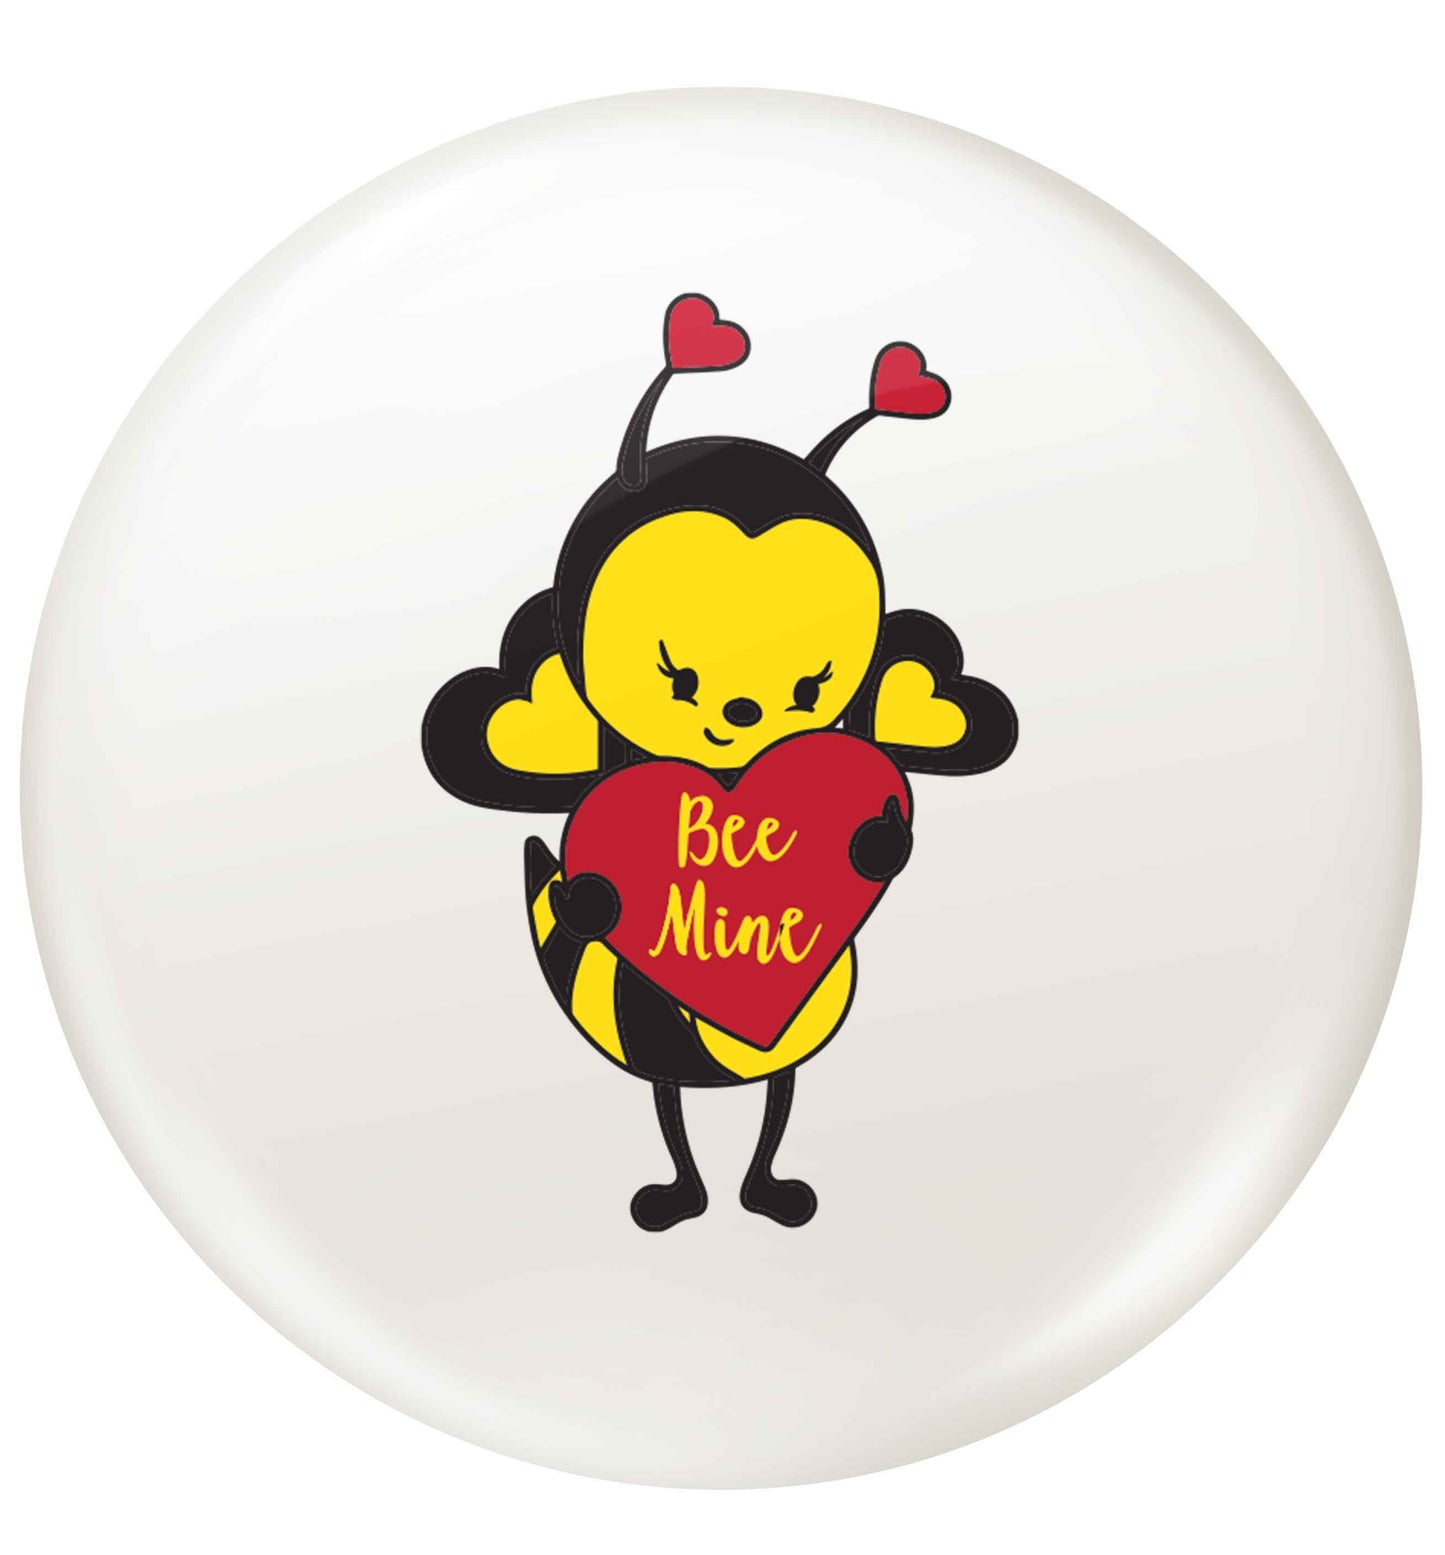 Bee mine small 25mm Pin badge